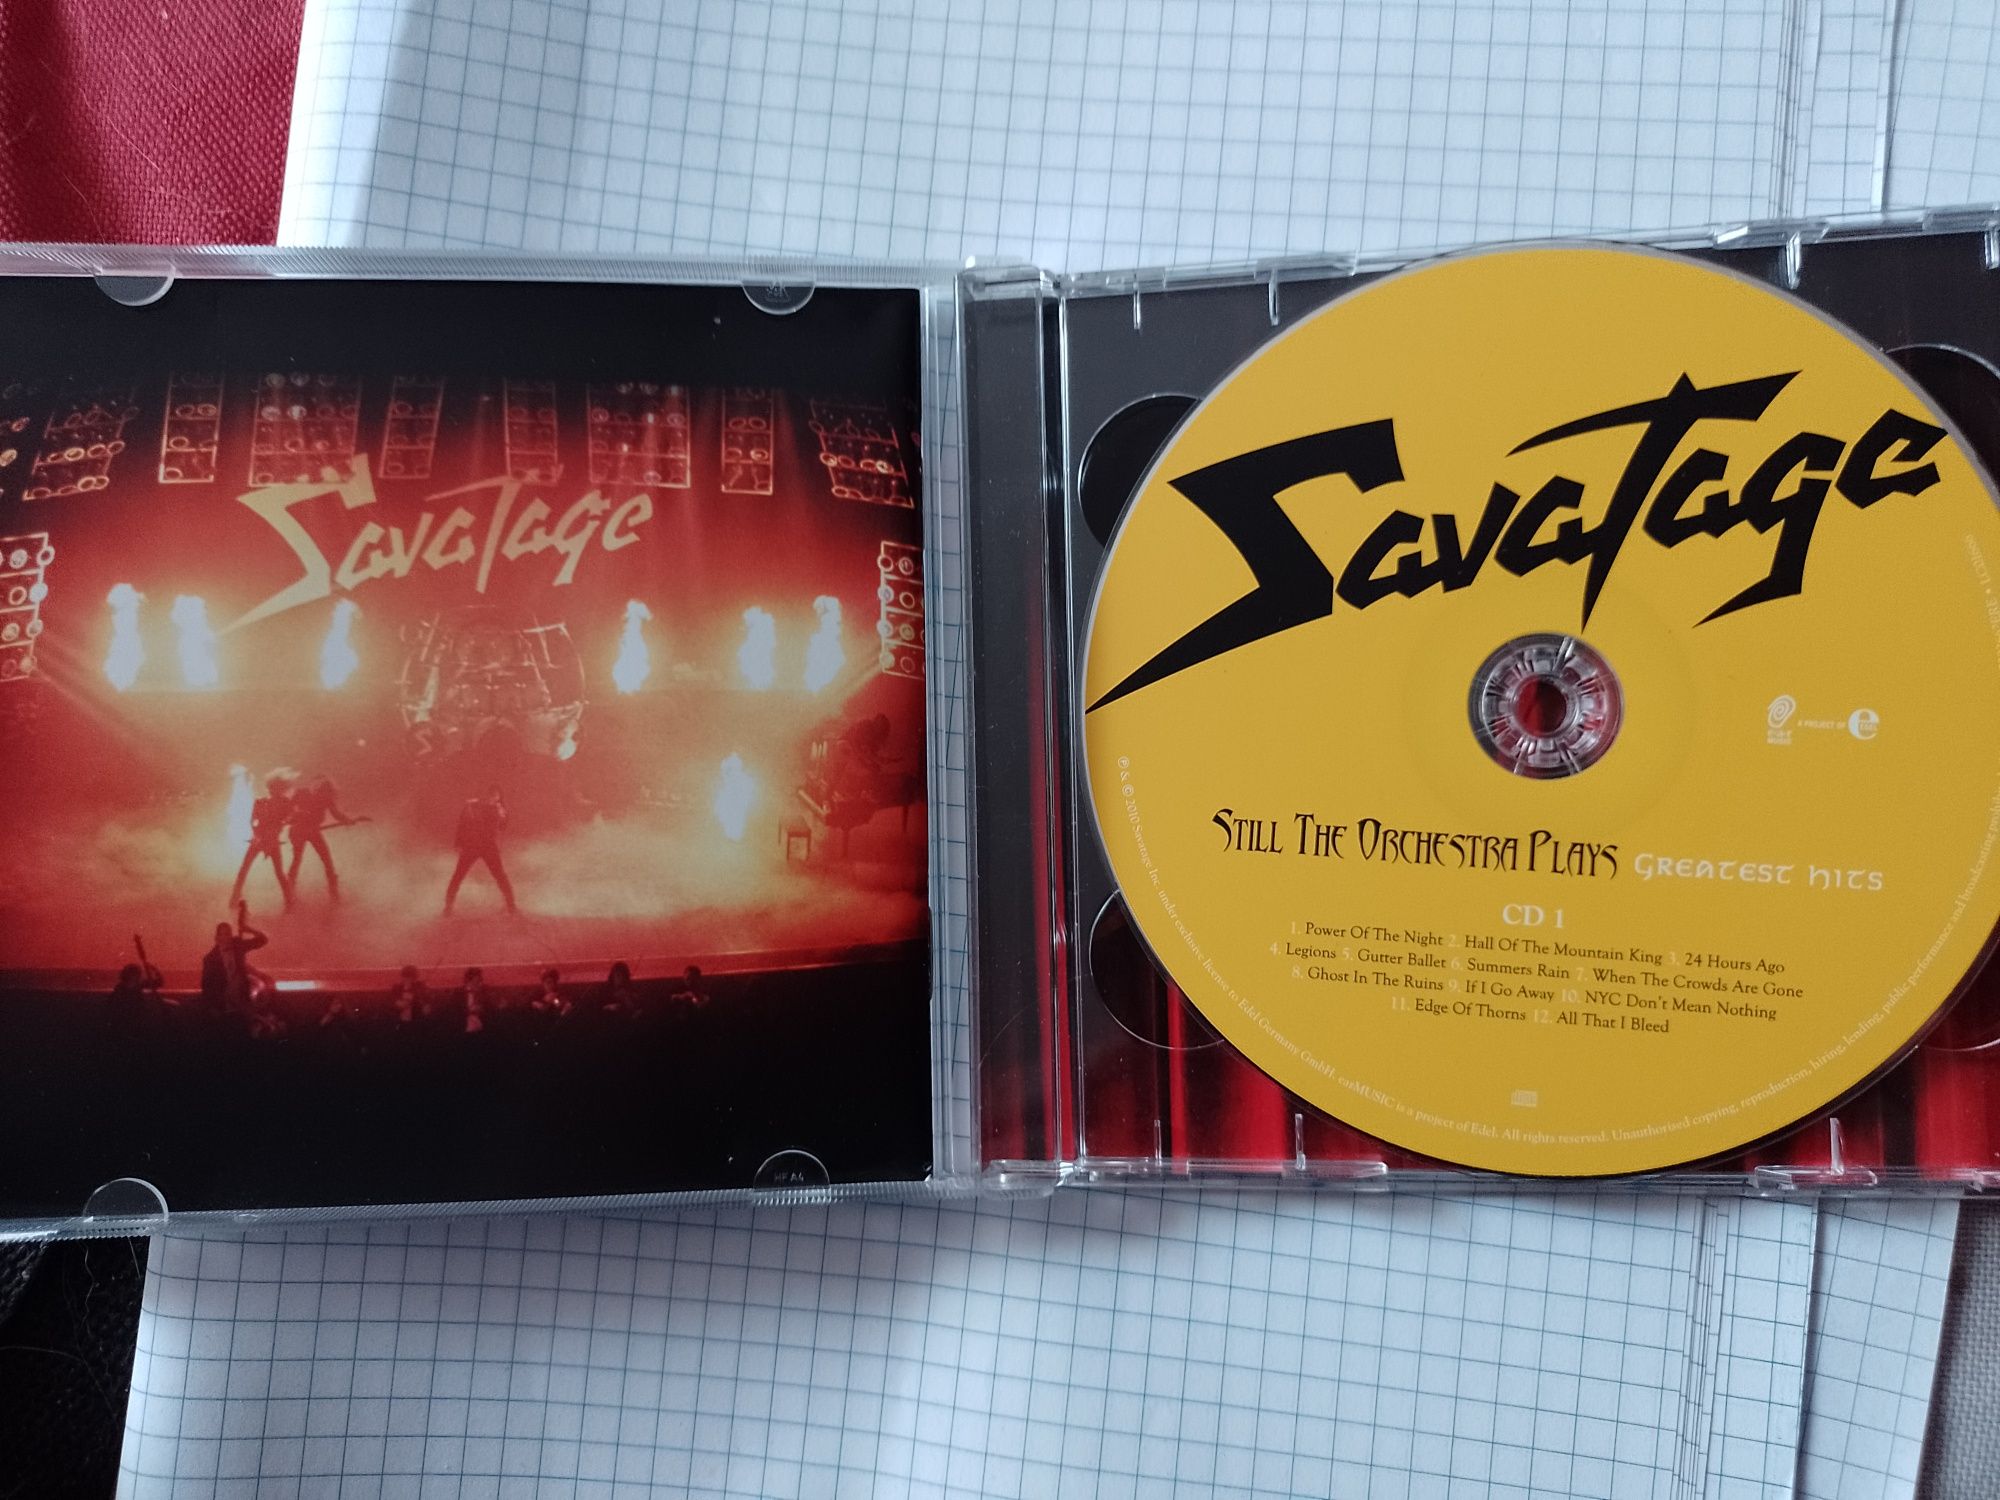 CD Savatage stil the orchestra plays greatest hits volume 1$2